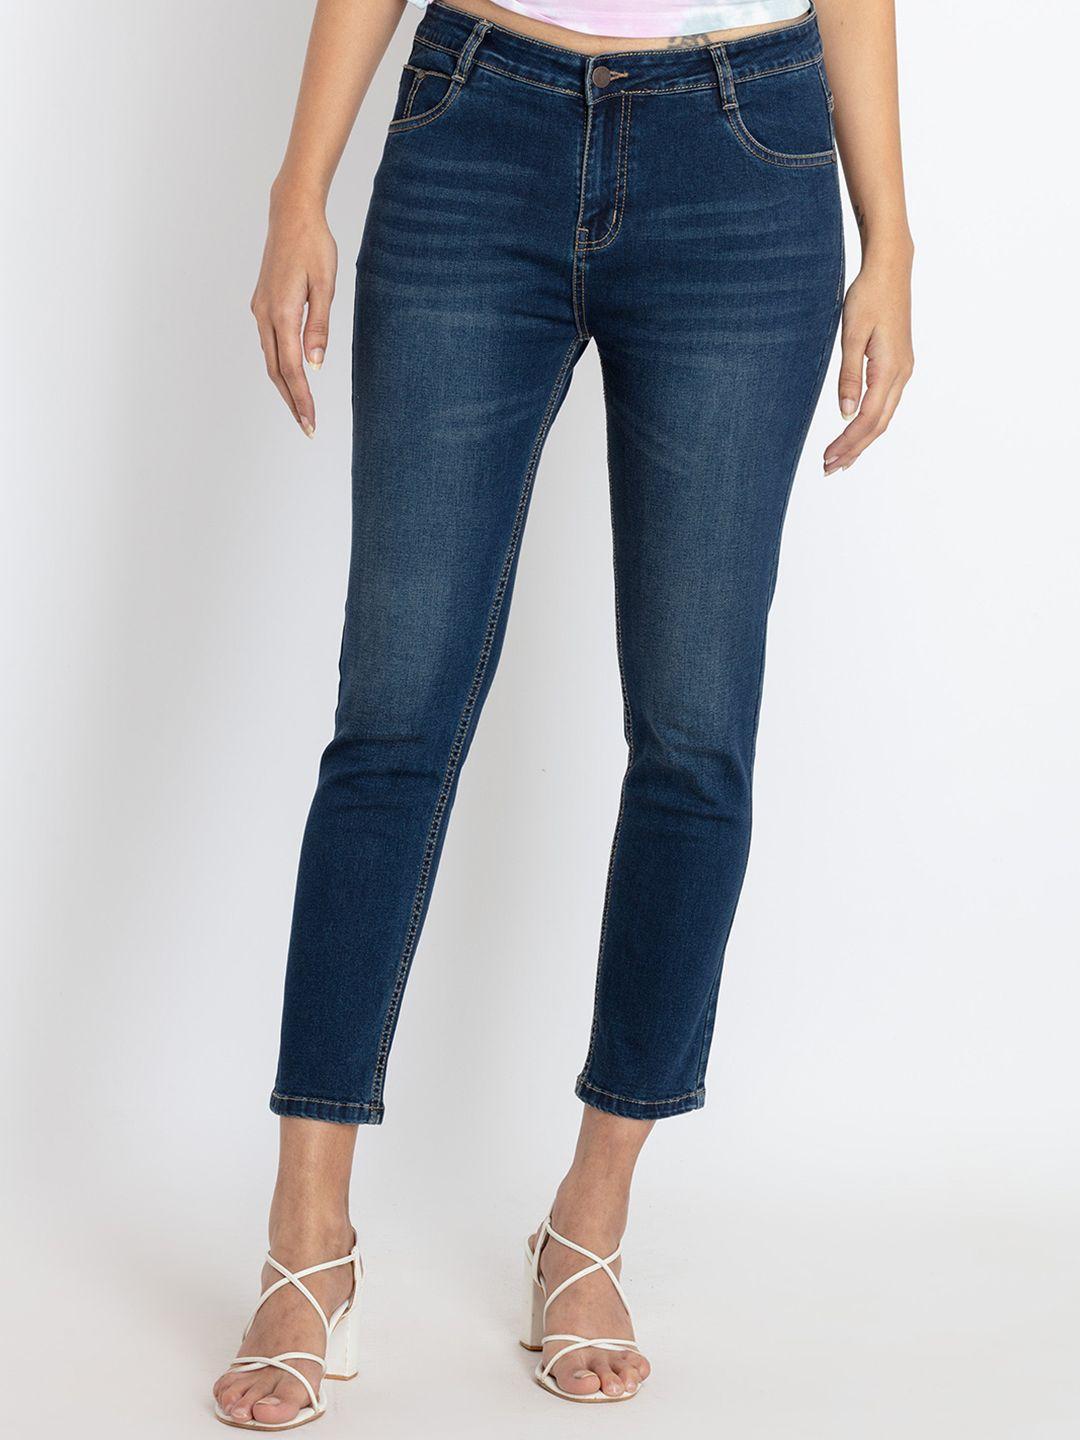 status quo women skinny fit light fade cotton jeans